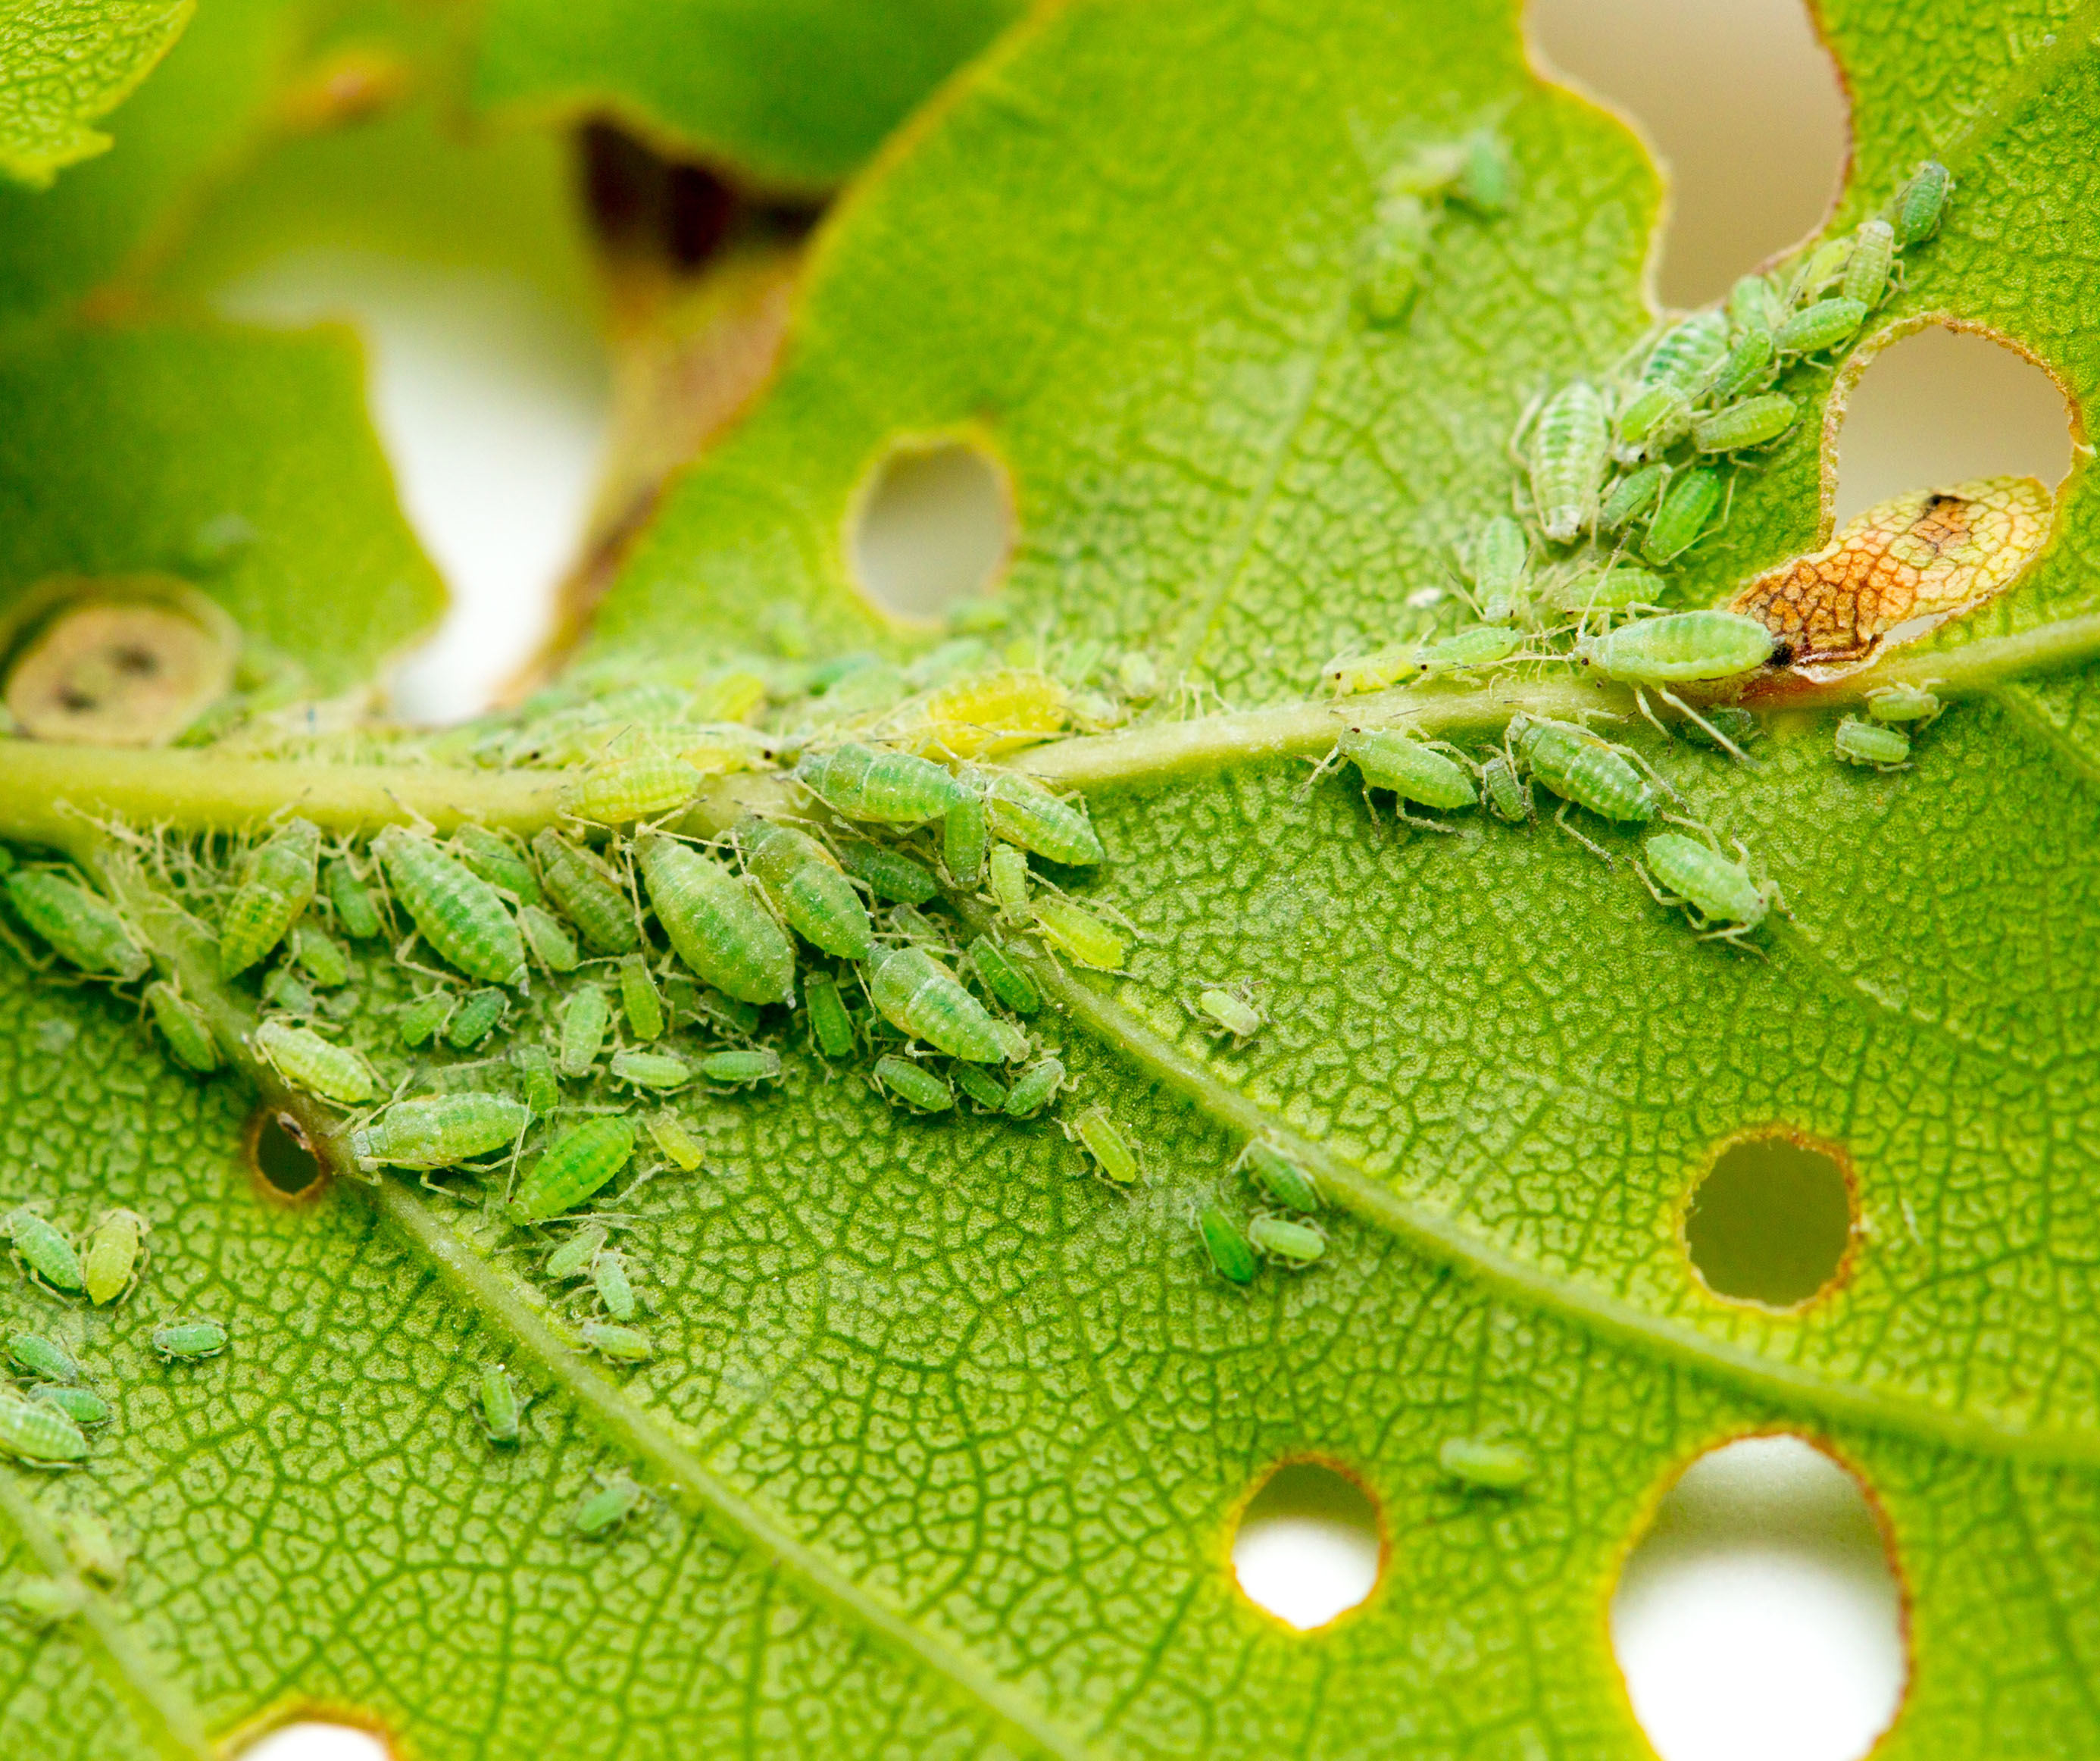 aphids on leaf damage - ss [1645x1379]